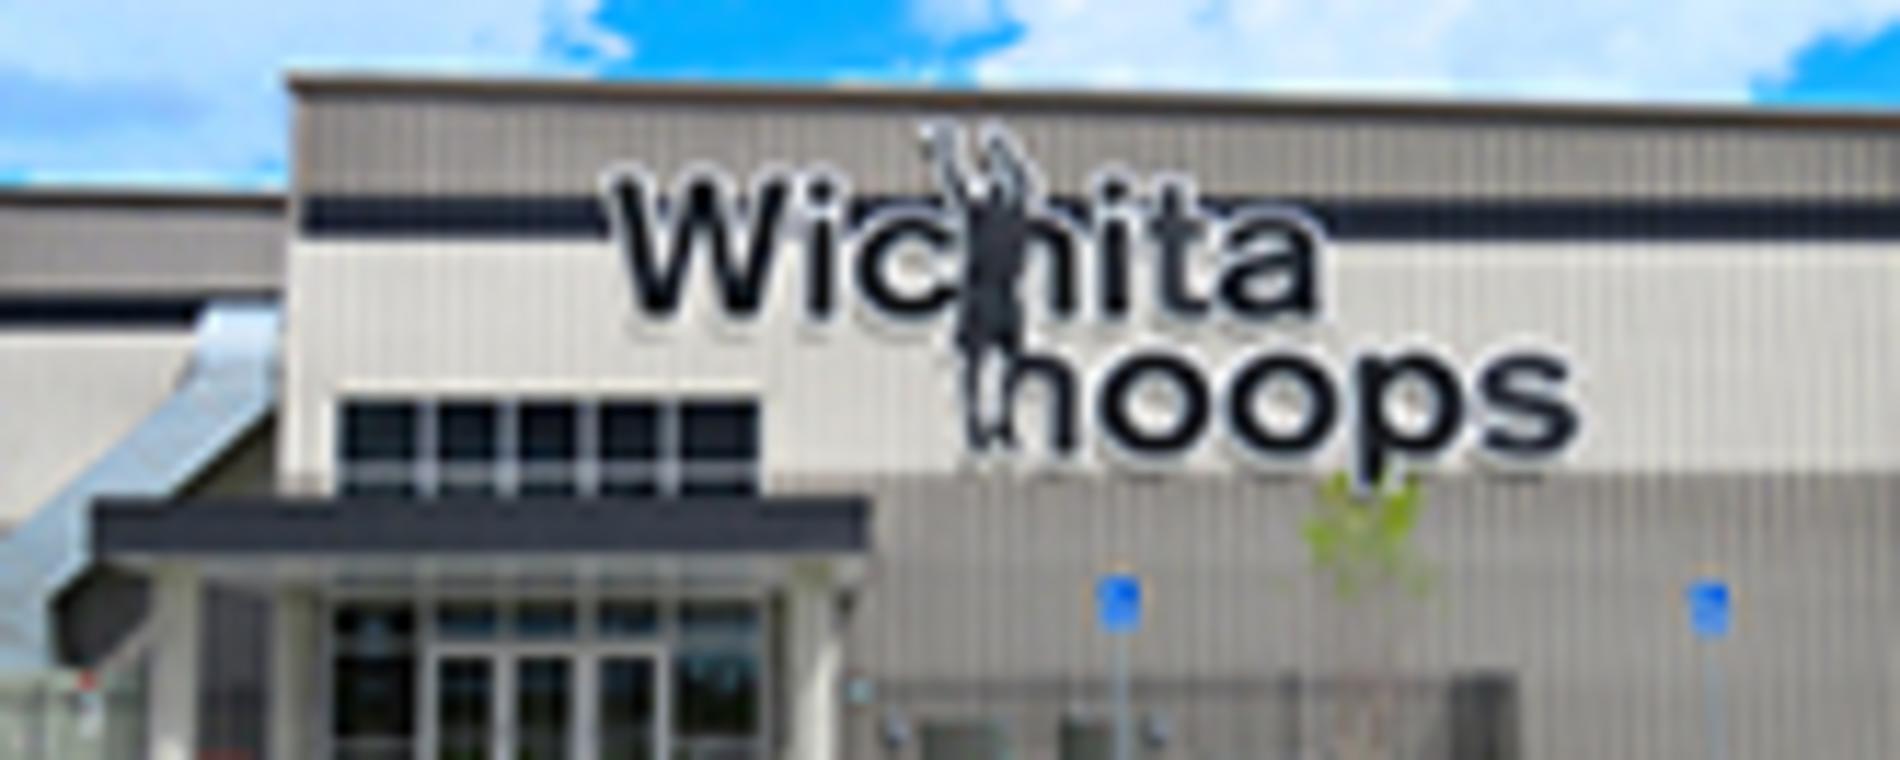 Wichita Hoops Building Front